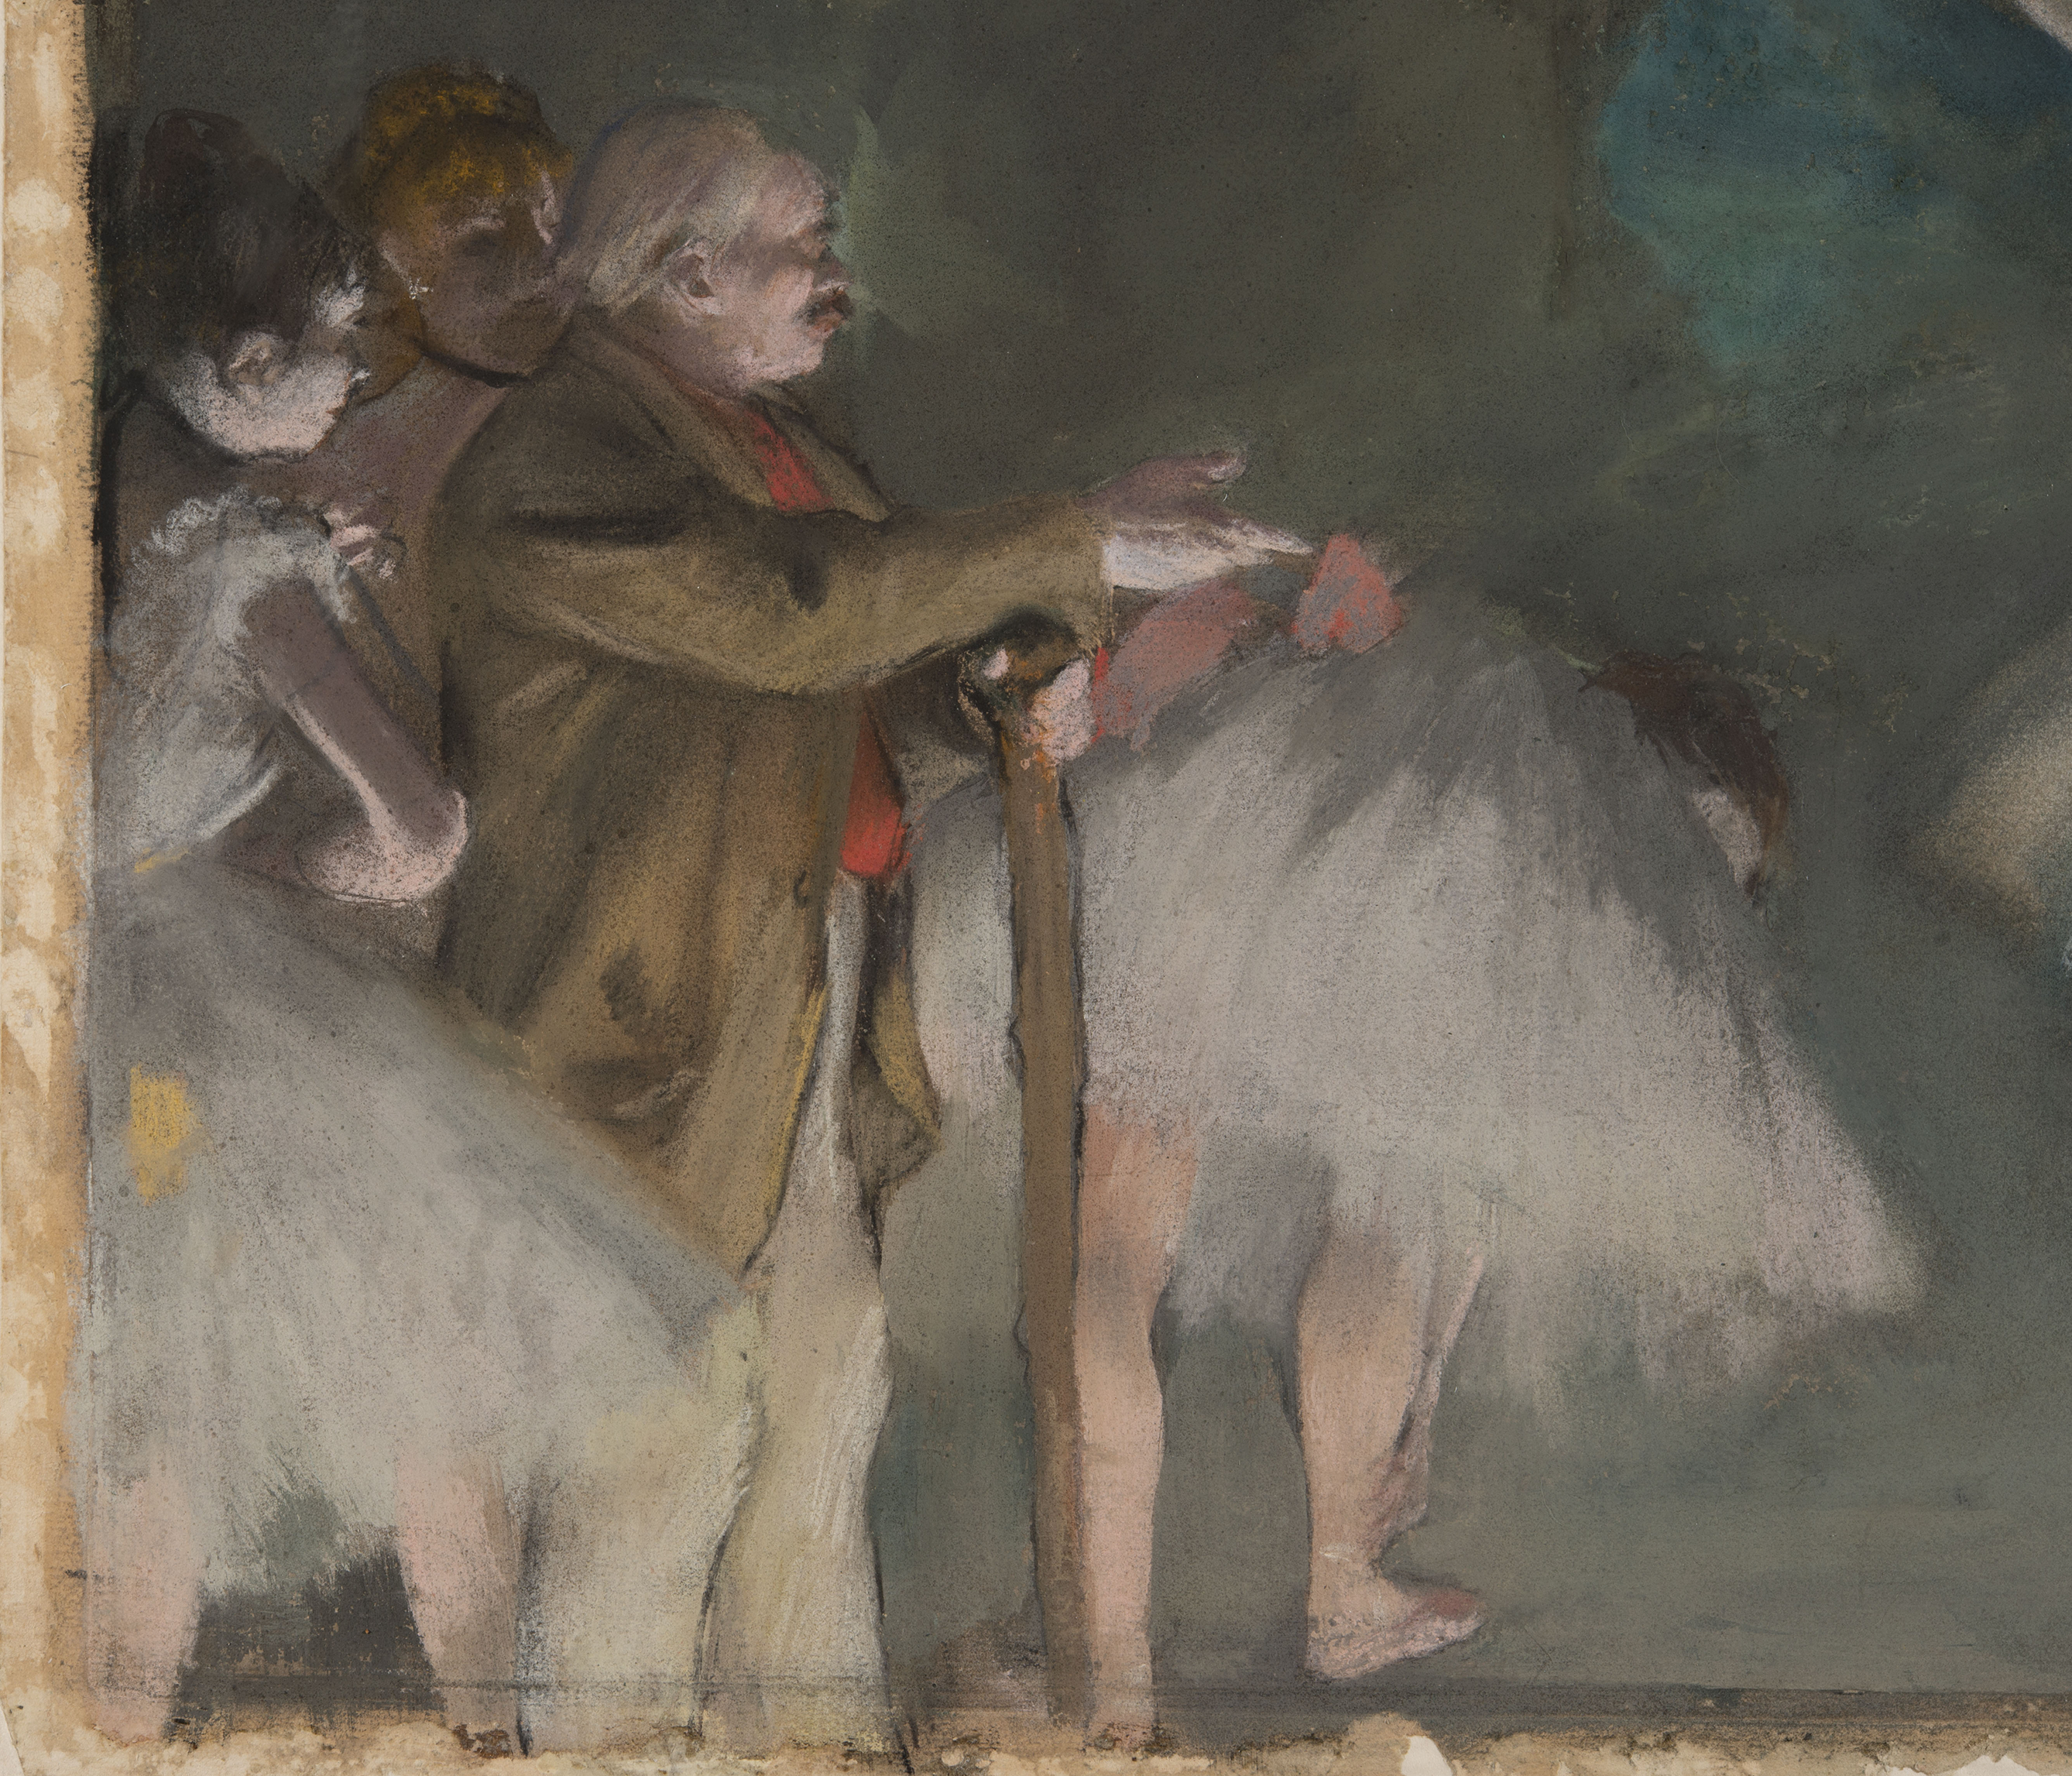 https://blobcdn.nelson-atkins.org/wpmediablob/FPC/img/Impressionism/614_F73-30_Degas_Rehearsal-of-the-Ballet/614.t08_F73-30_Degas_Rehearsal-of-the-Ballet_Detail-t08.png